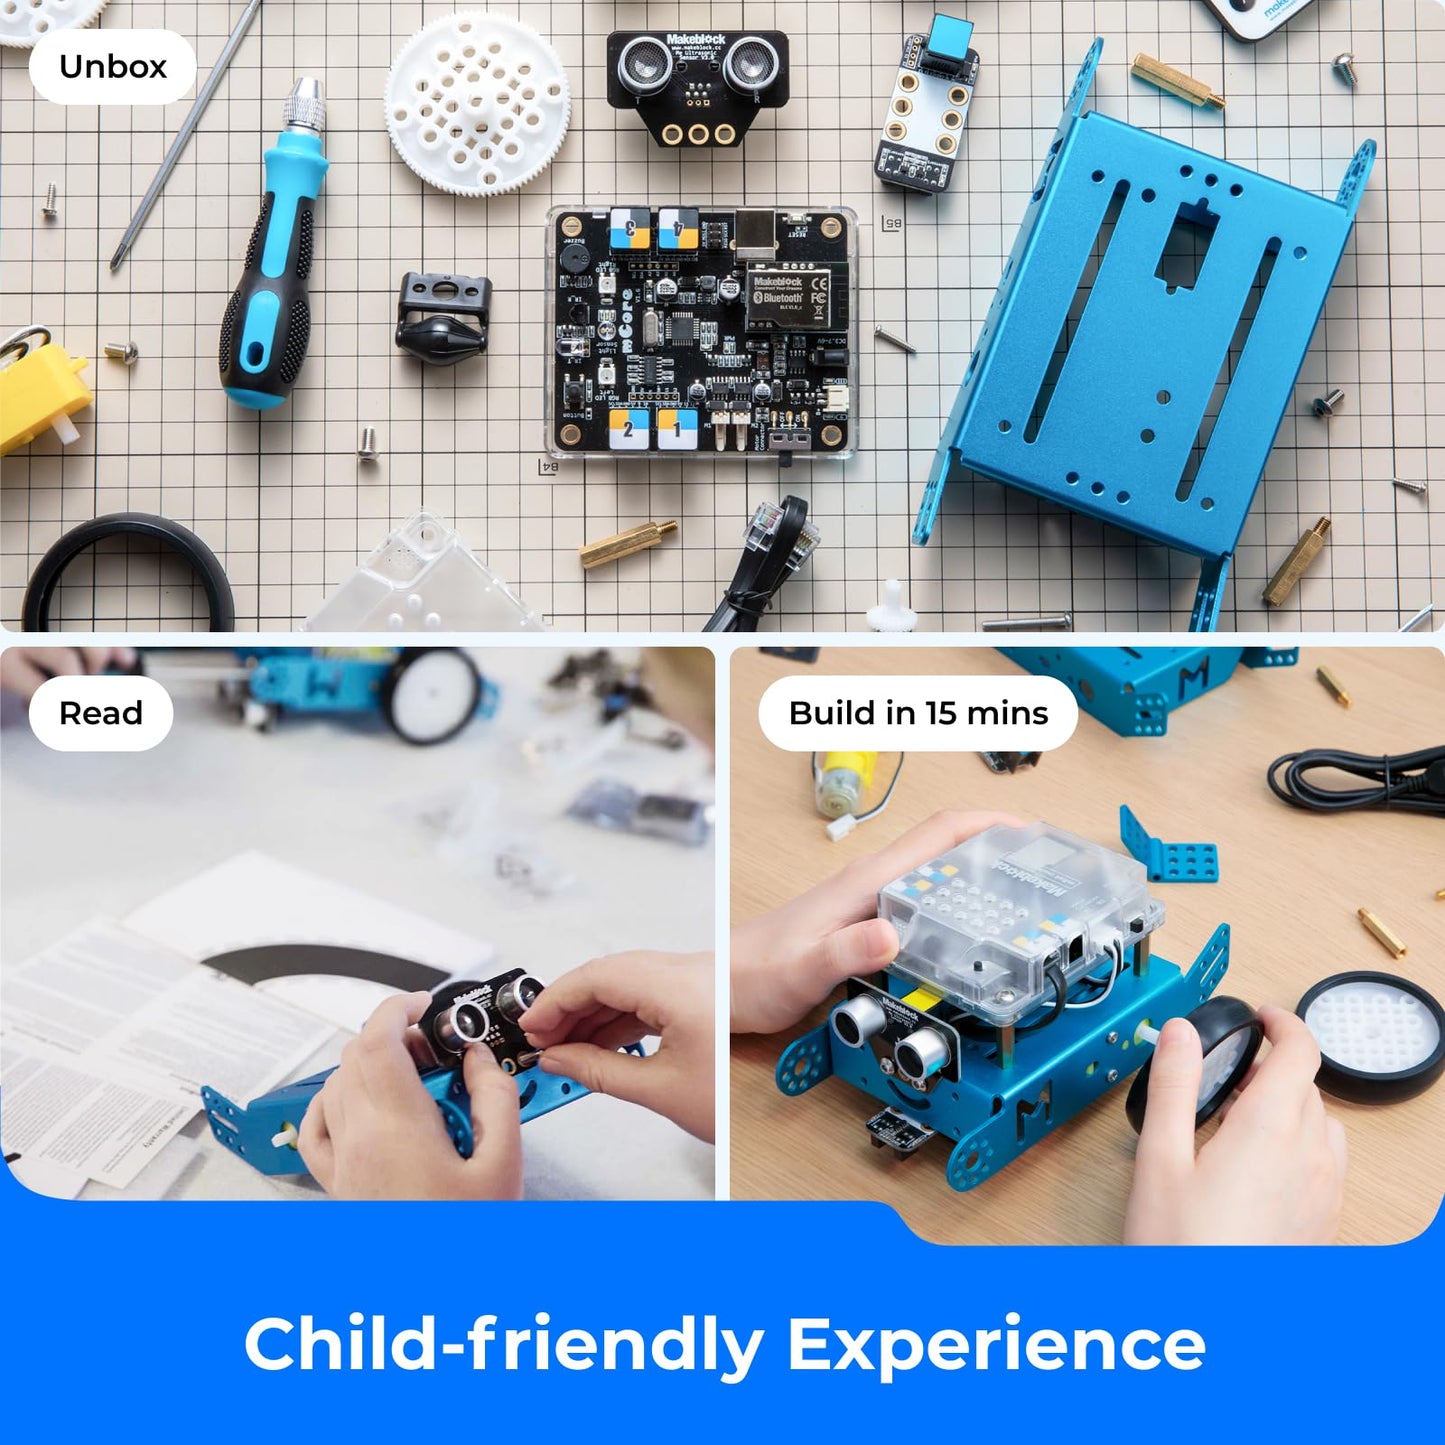 Makeblock mBot Robot Kit STEM Toy for Kids to Learn Programming